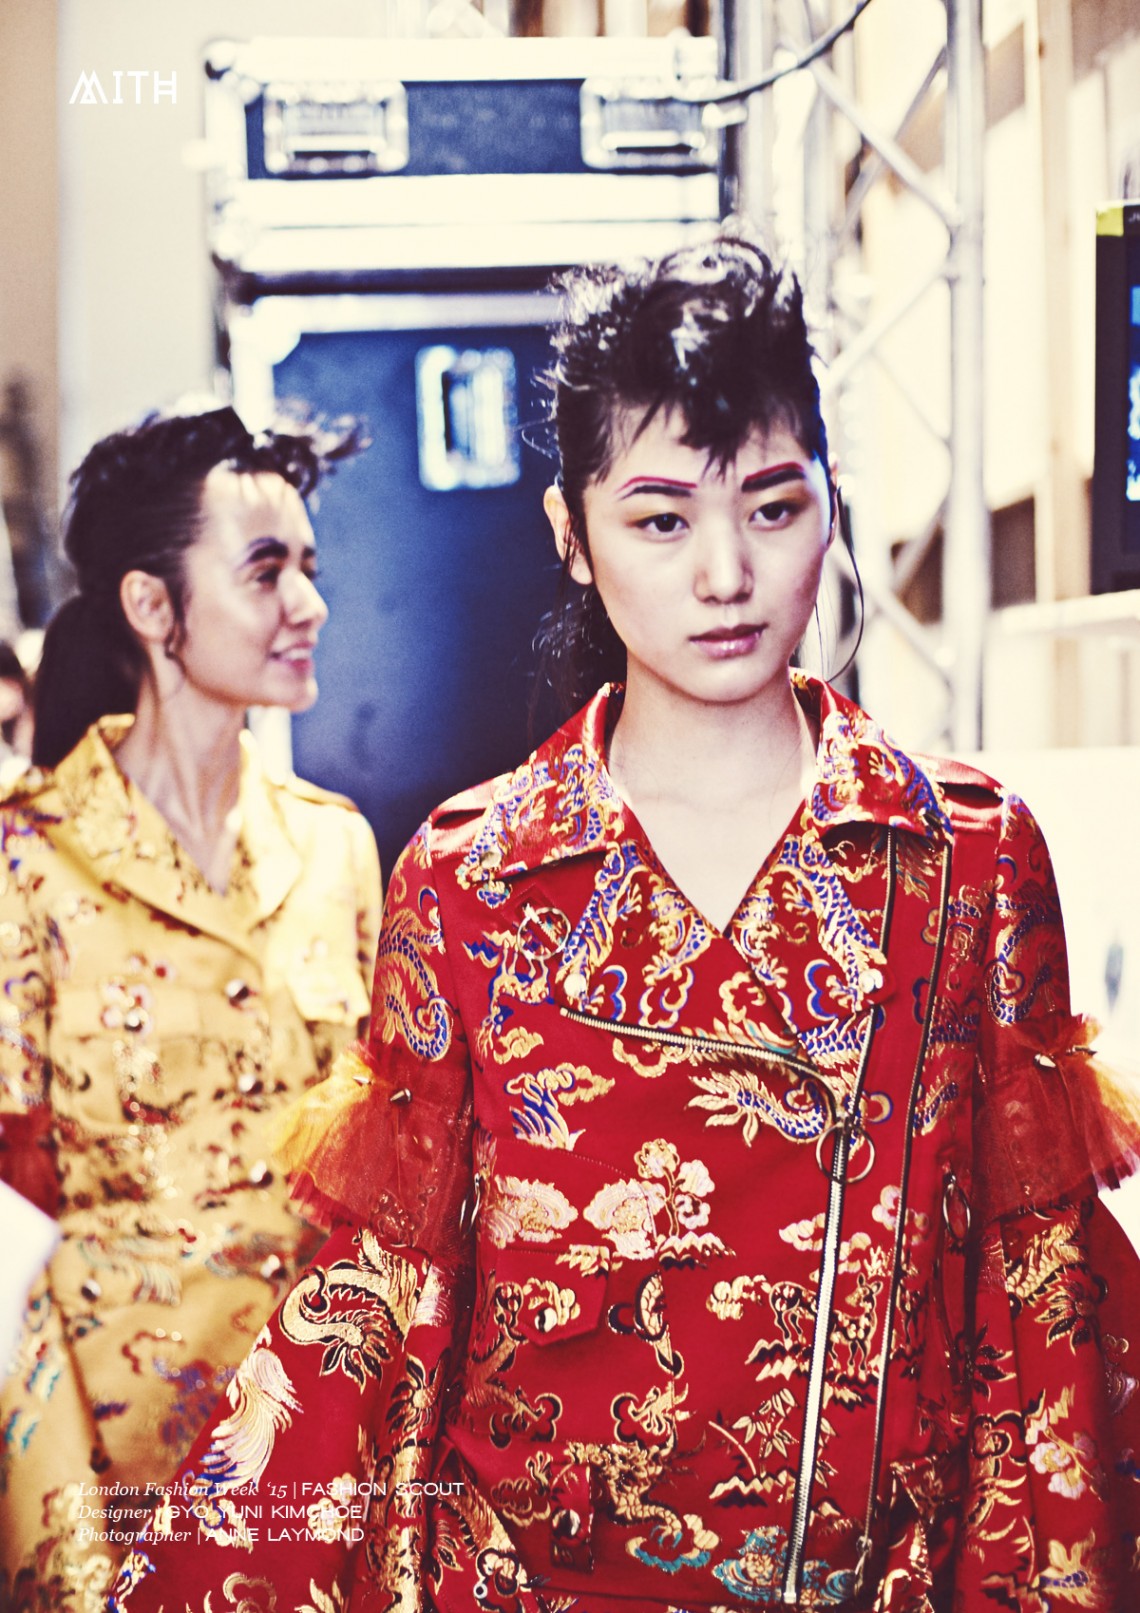 Gyo Yuni Kimchoe SS16 “Enlightened Rebel” Backstage :: London Fashion Week x Fashion Scout Show